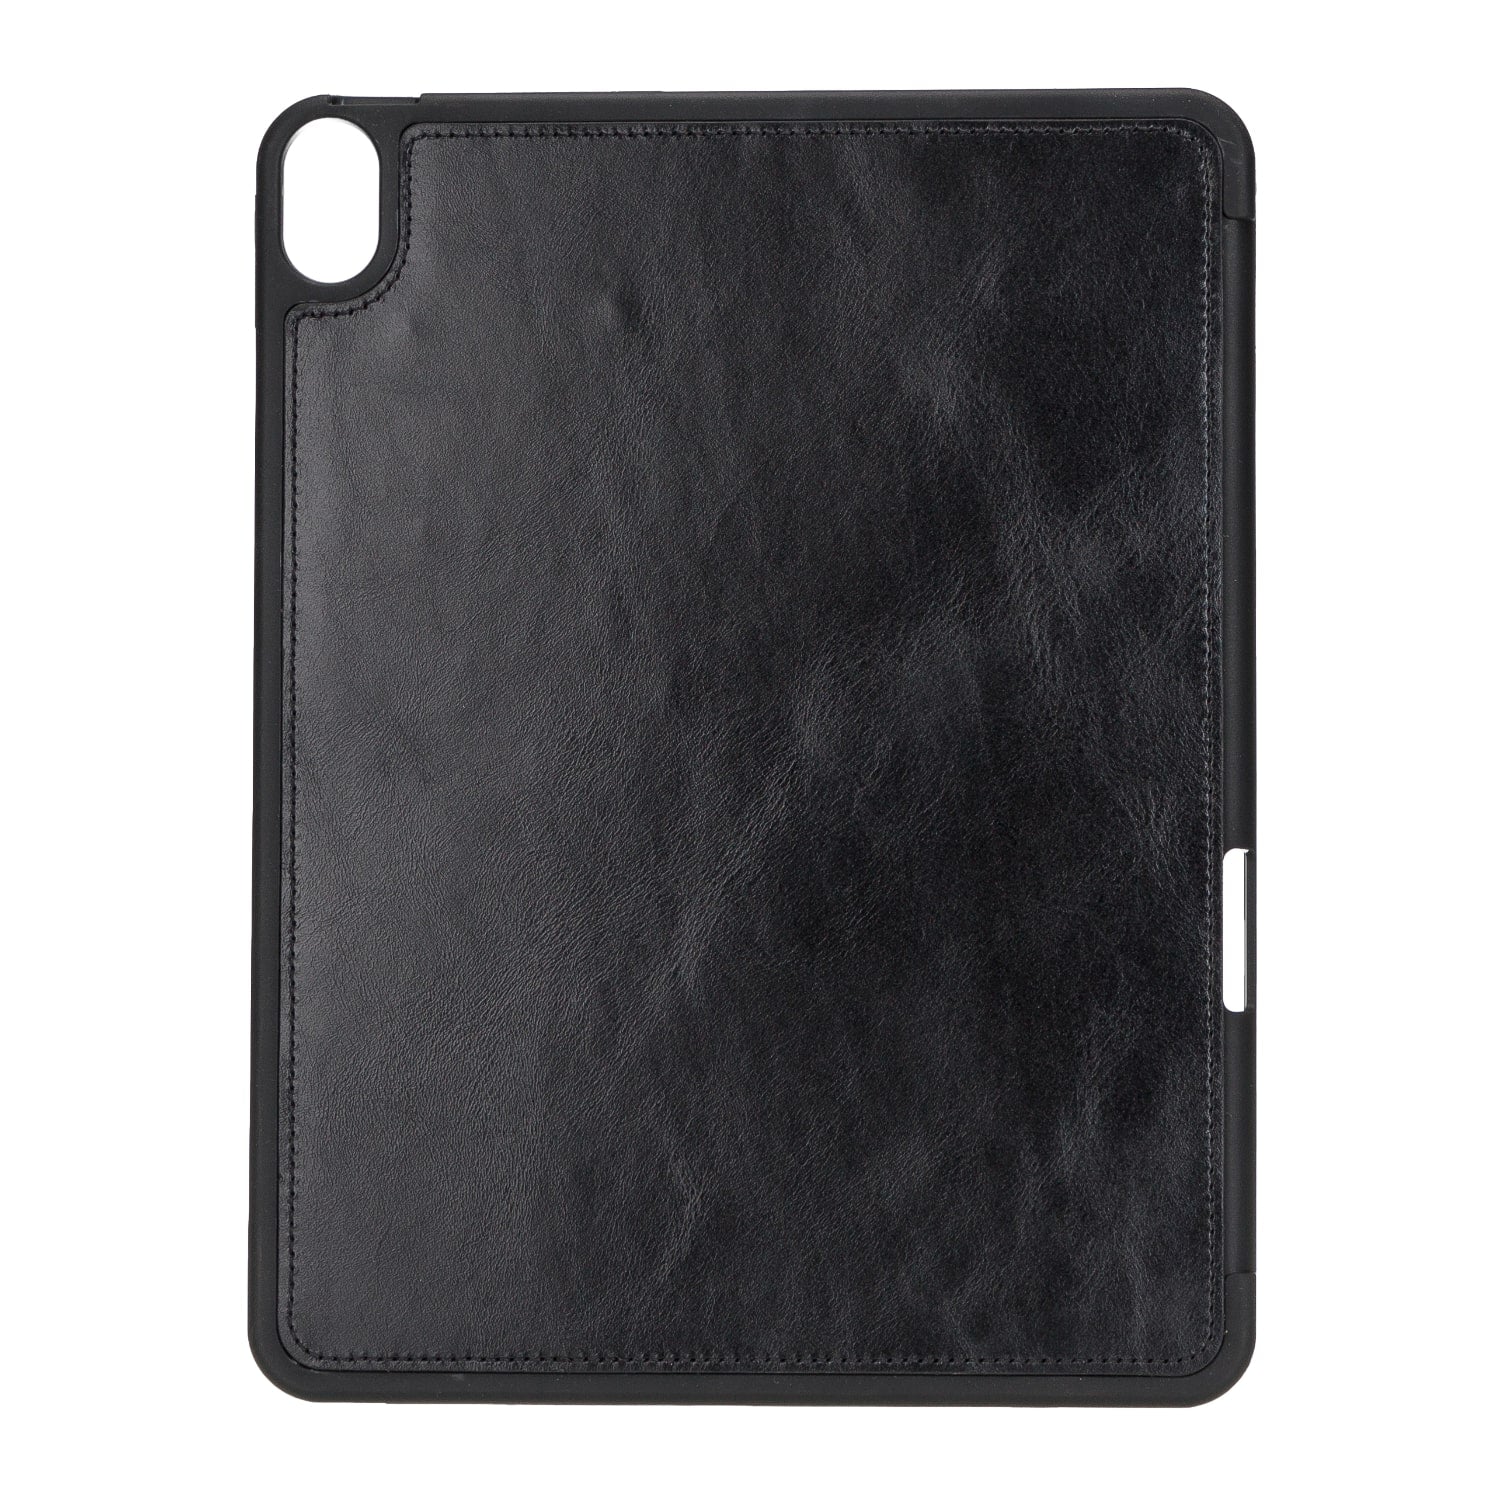 Black Leather iPad Air 10.9 Inc Smart Folio Case with Apple Pen Holder - Bomonti - 5